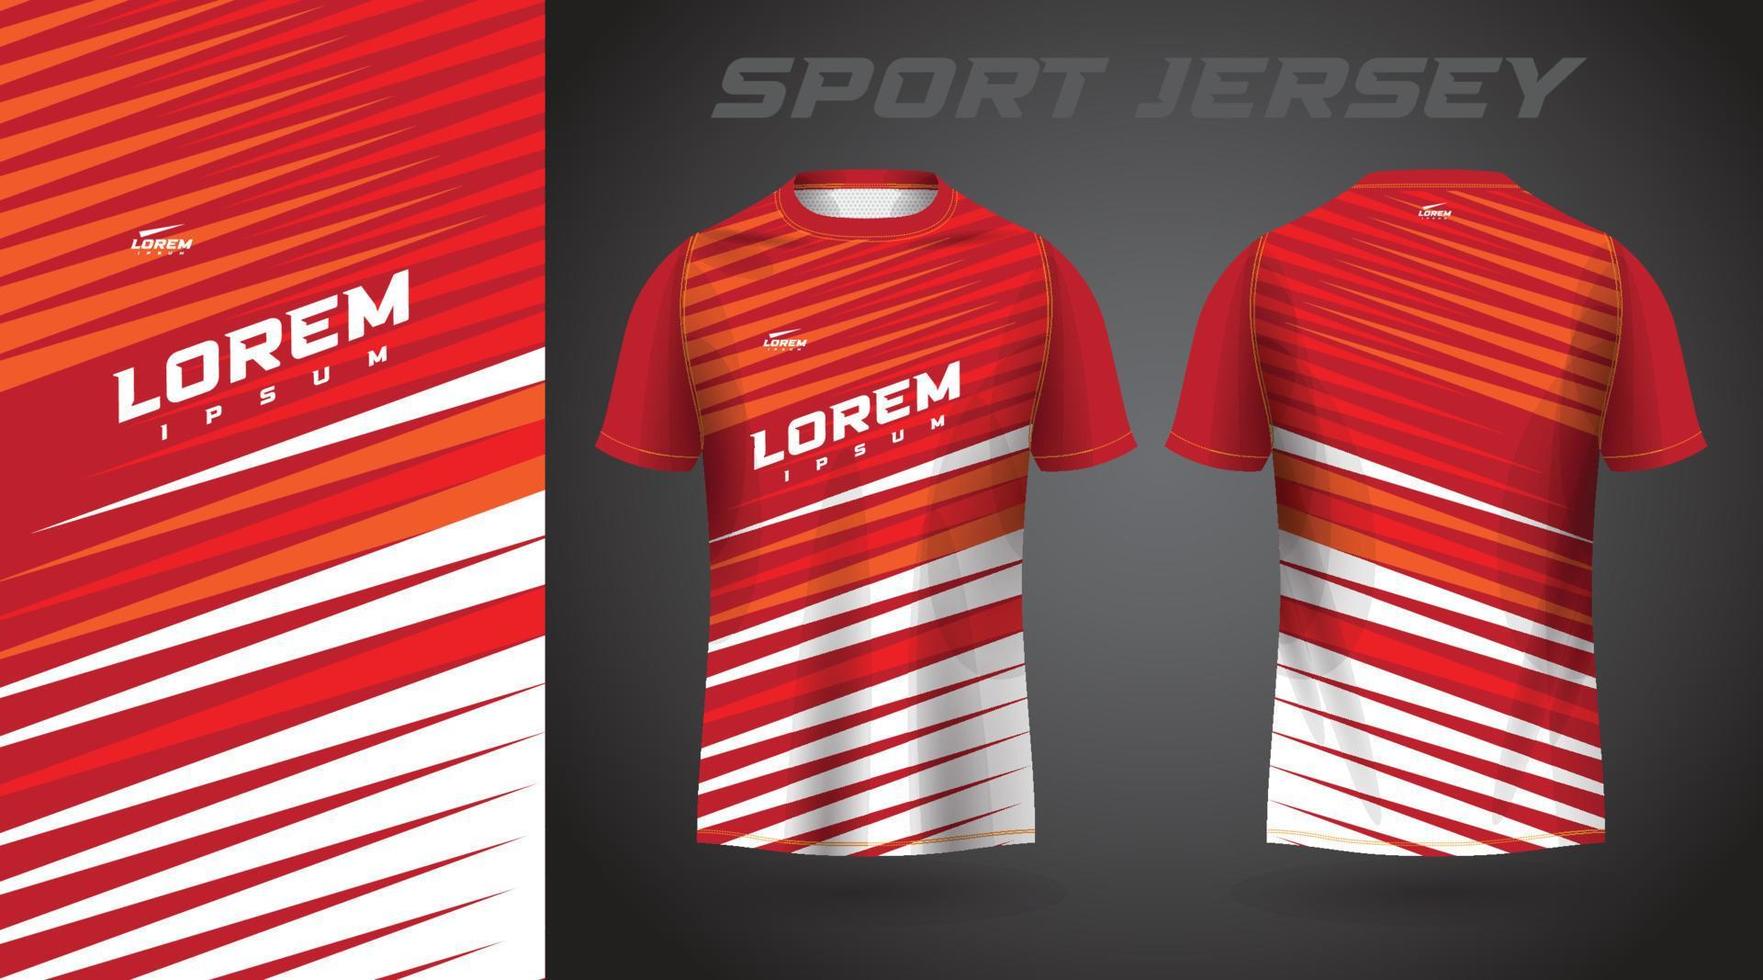 red sport jersey design vector